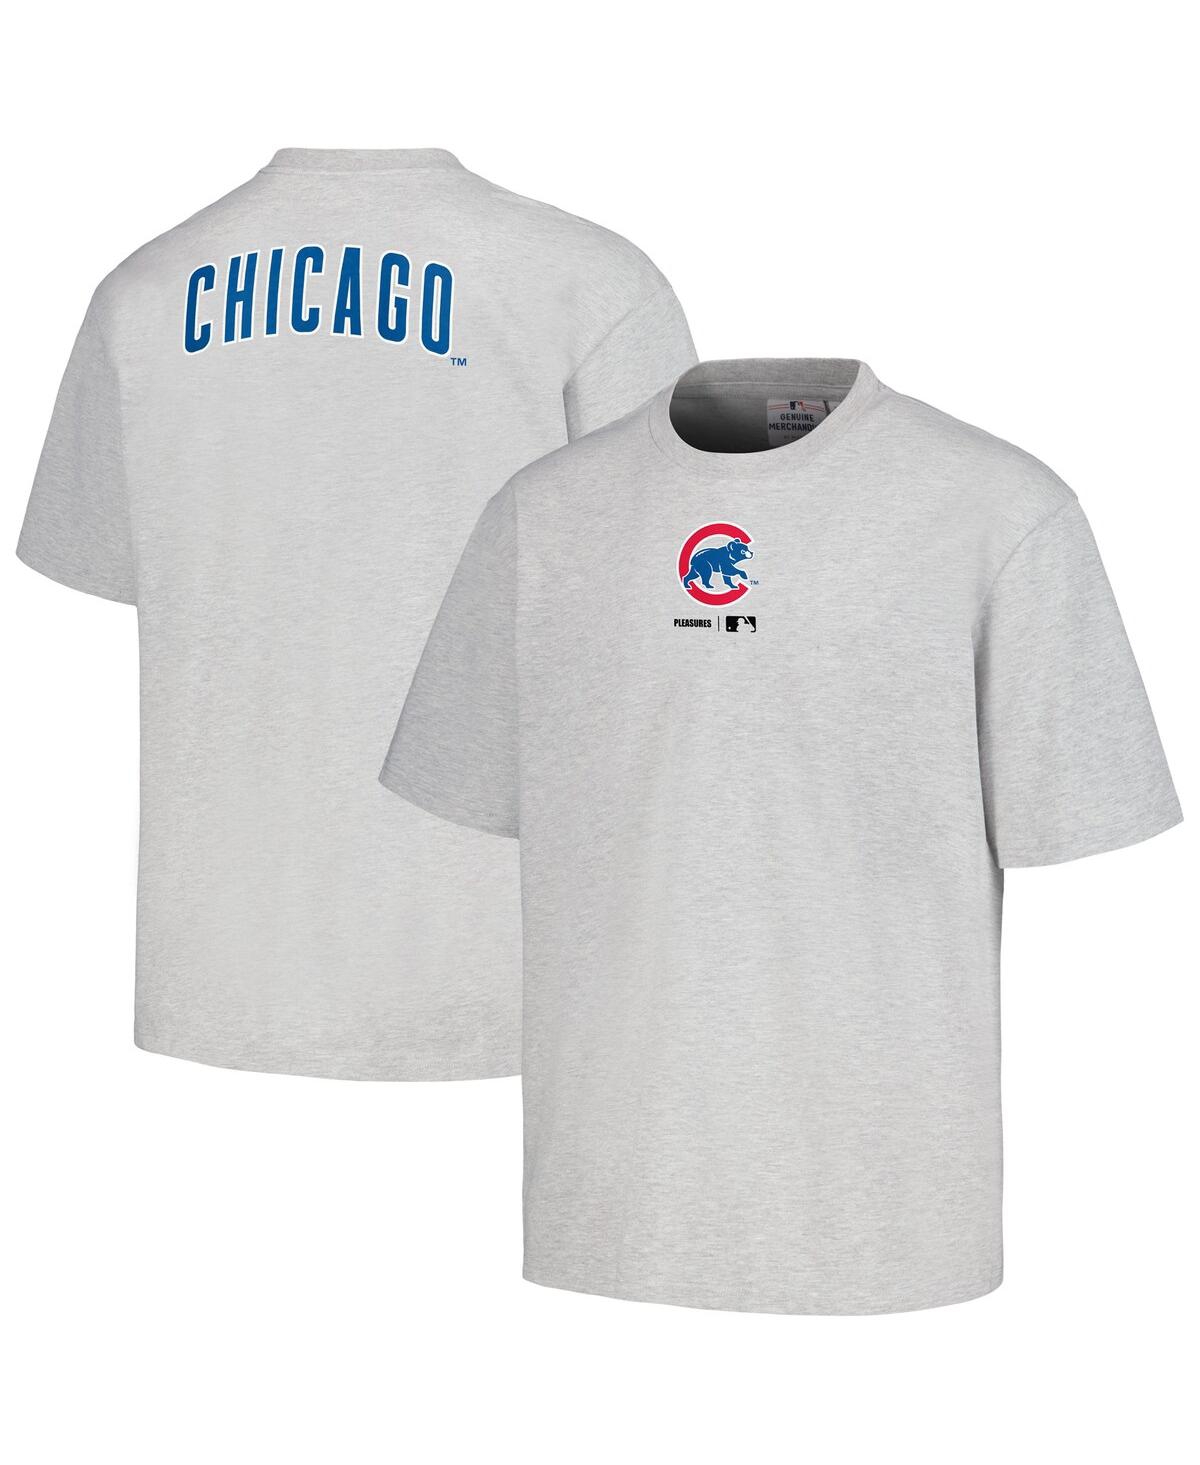 Men's Pleasures Gray Chicago Cubs Mascot T-shirt - Gray